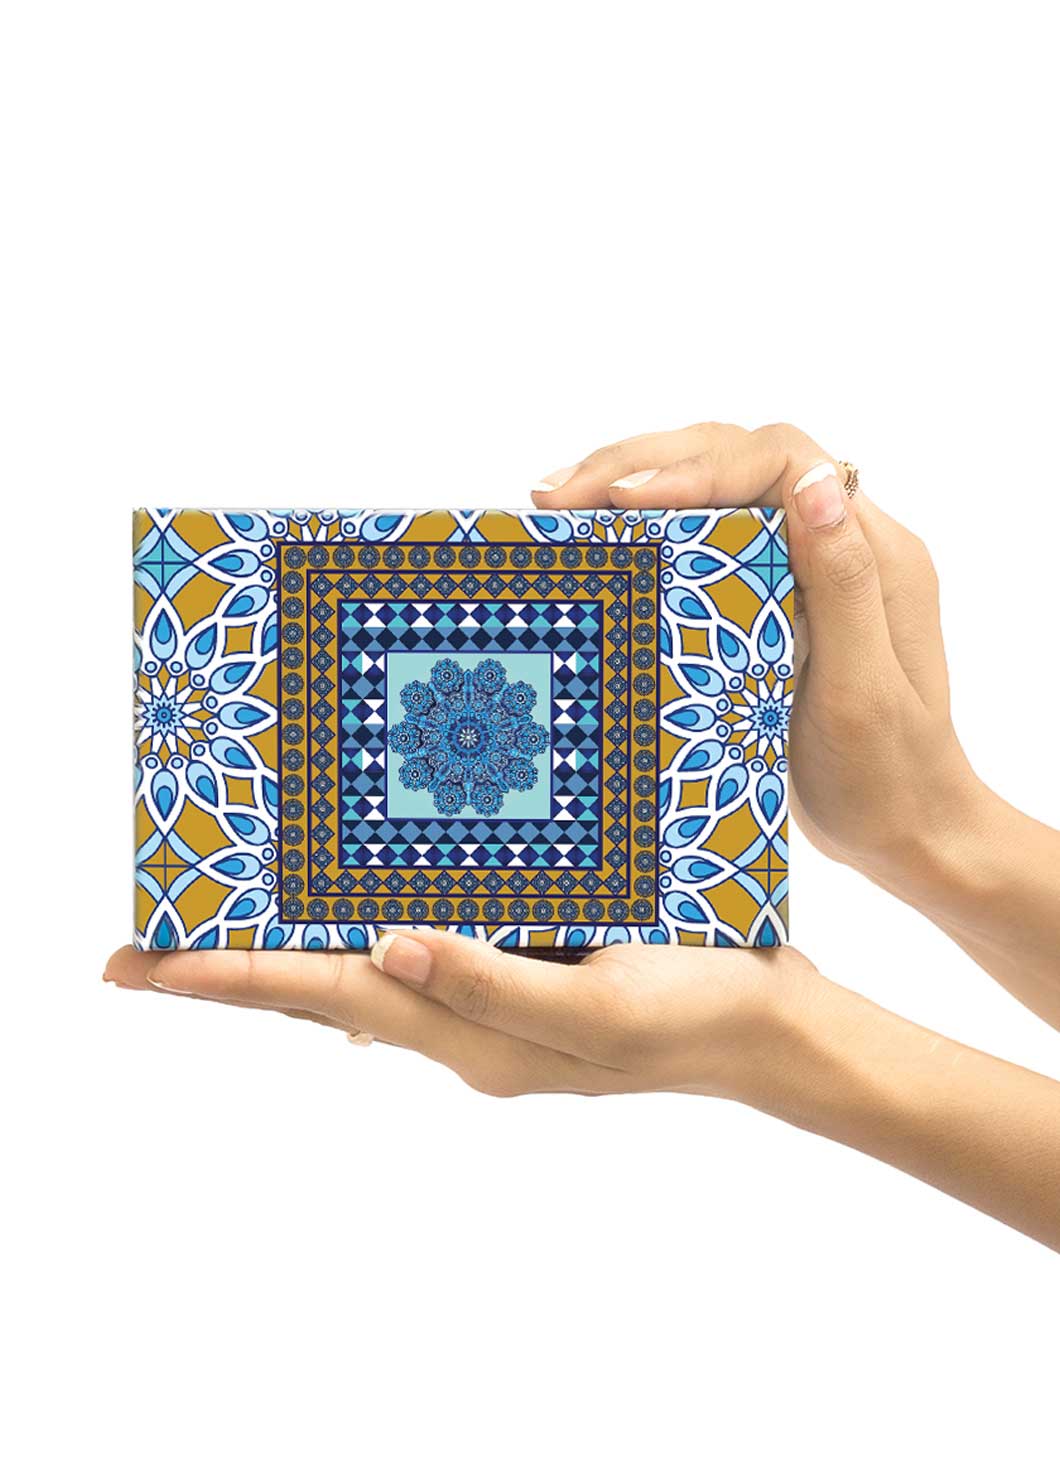 Golden & Persian Blue Design Box for Packing